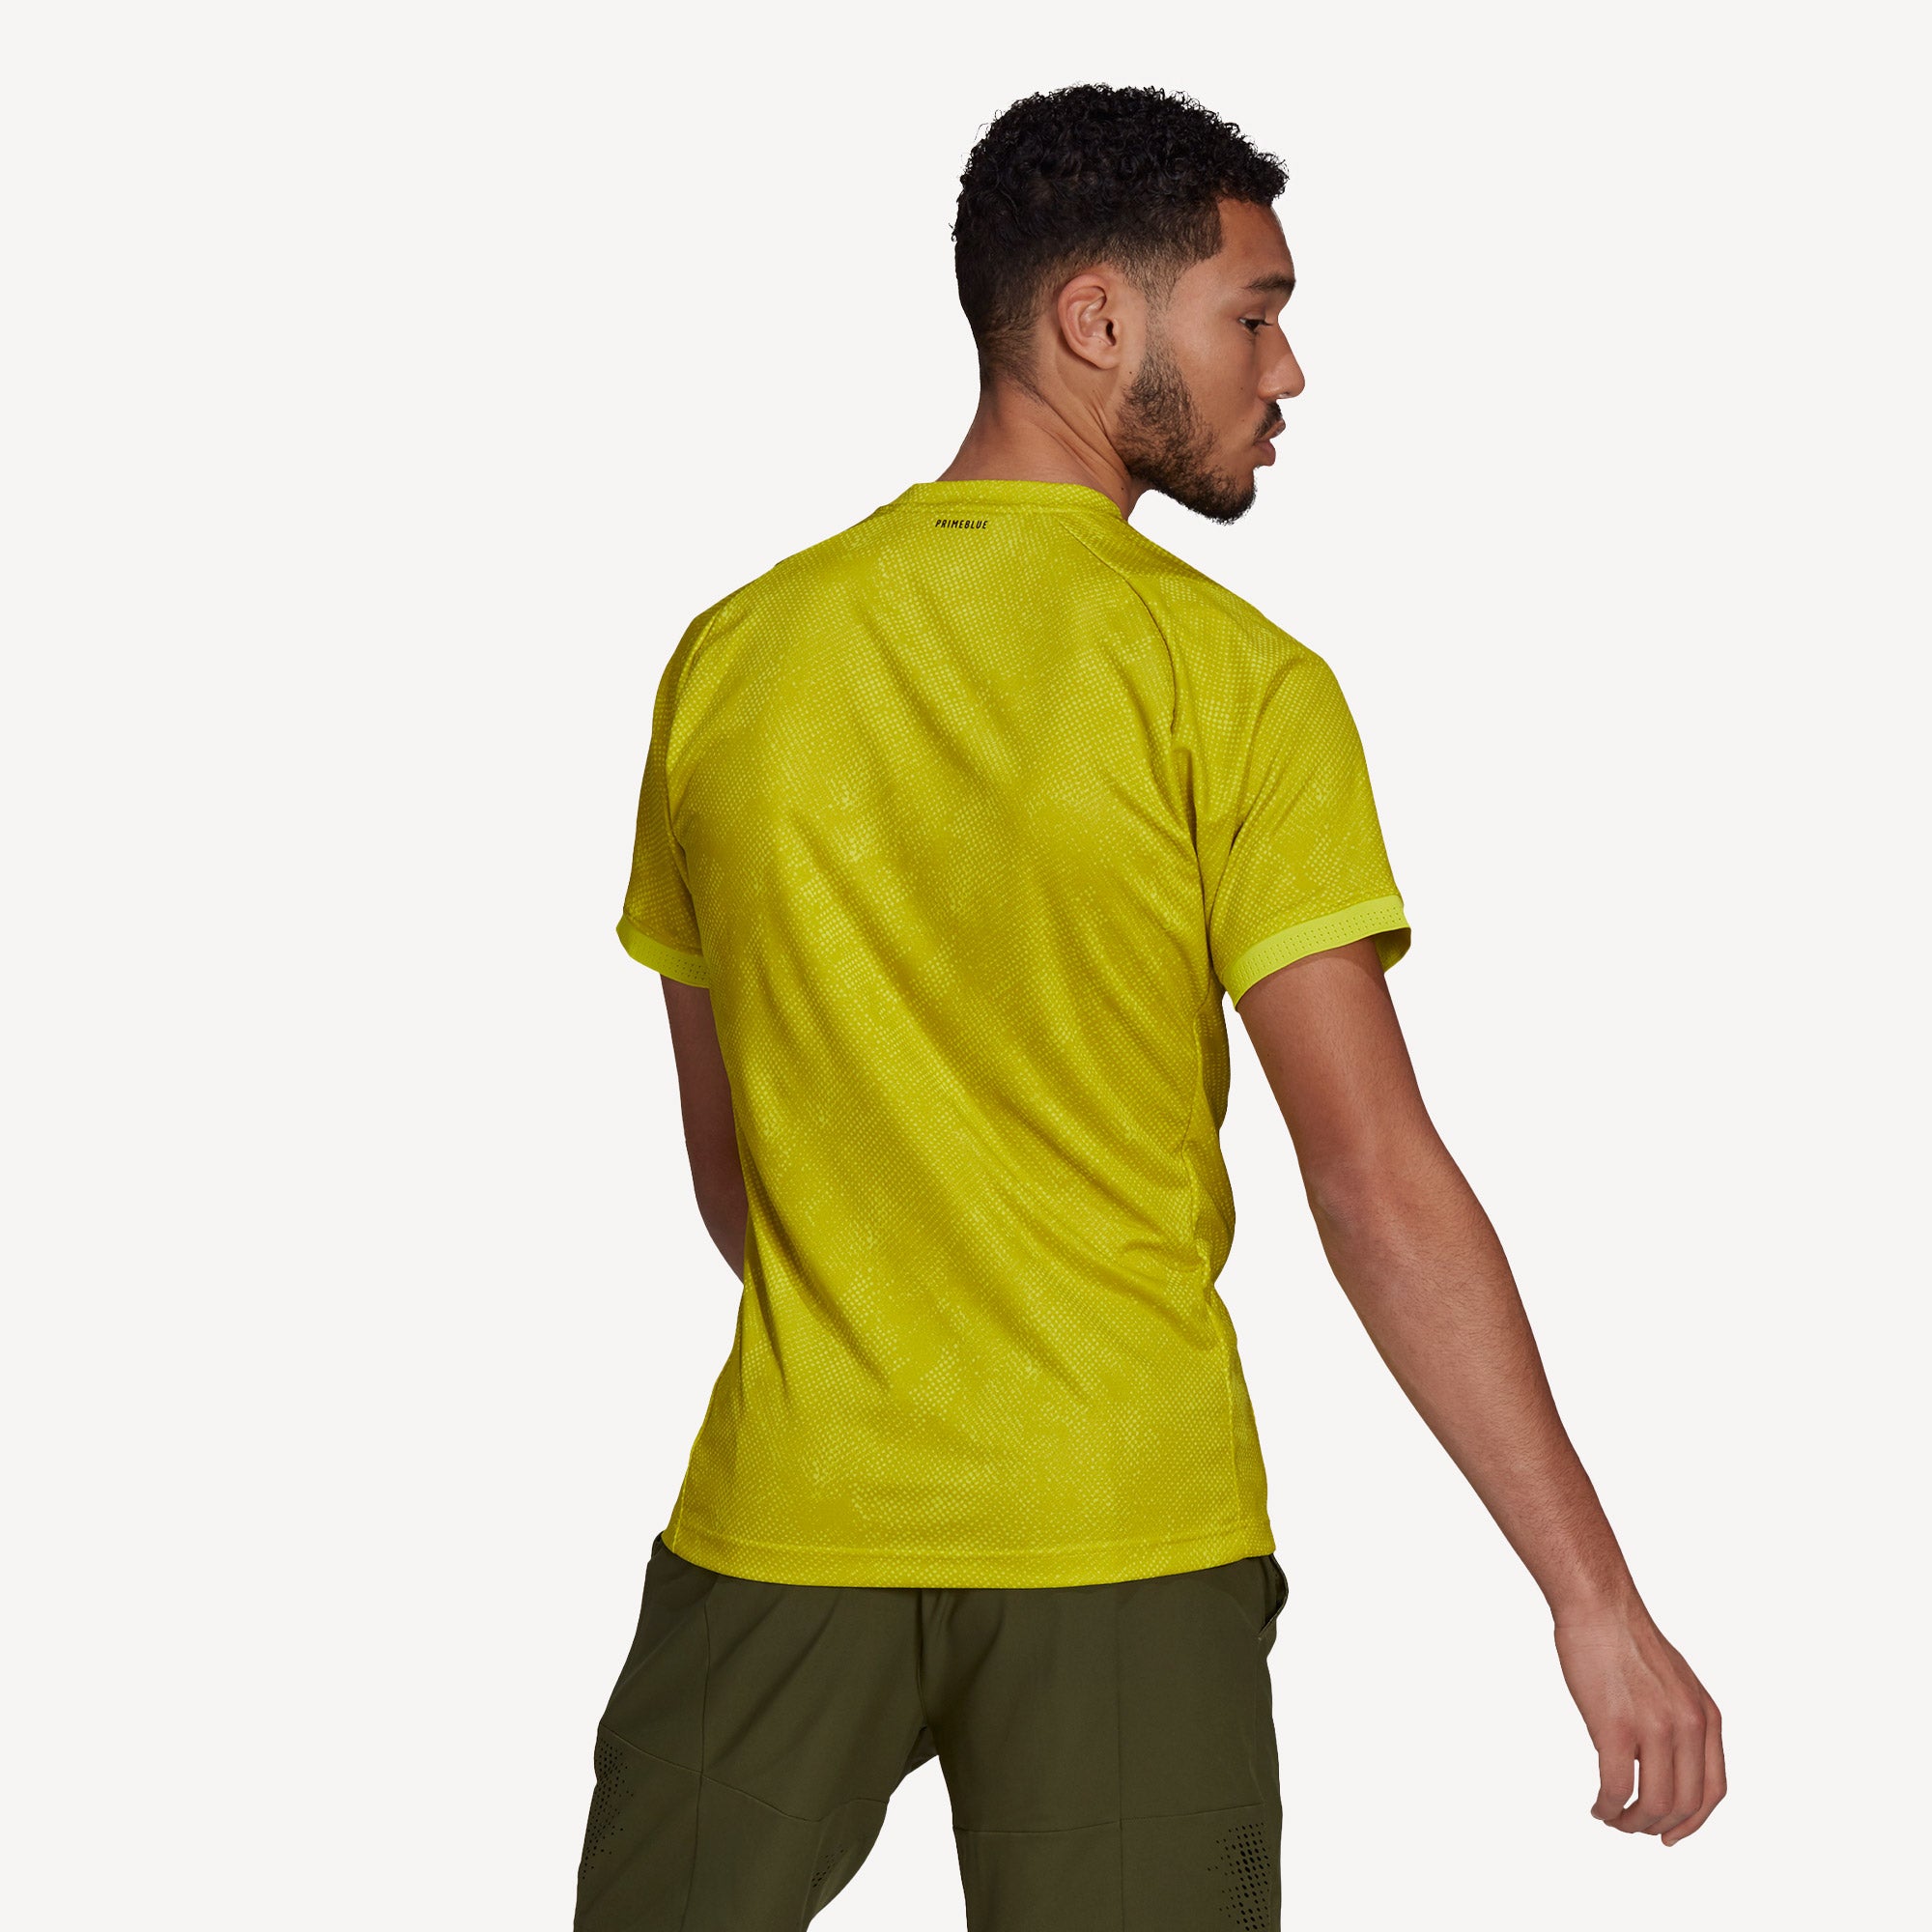 adidas Freelift Primeblue Men's Printed Tennis Shirt Yellow (2)